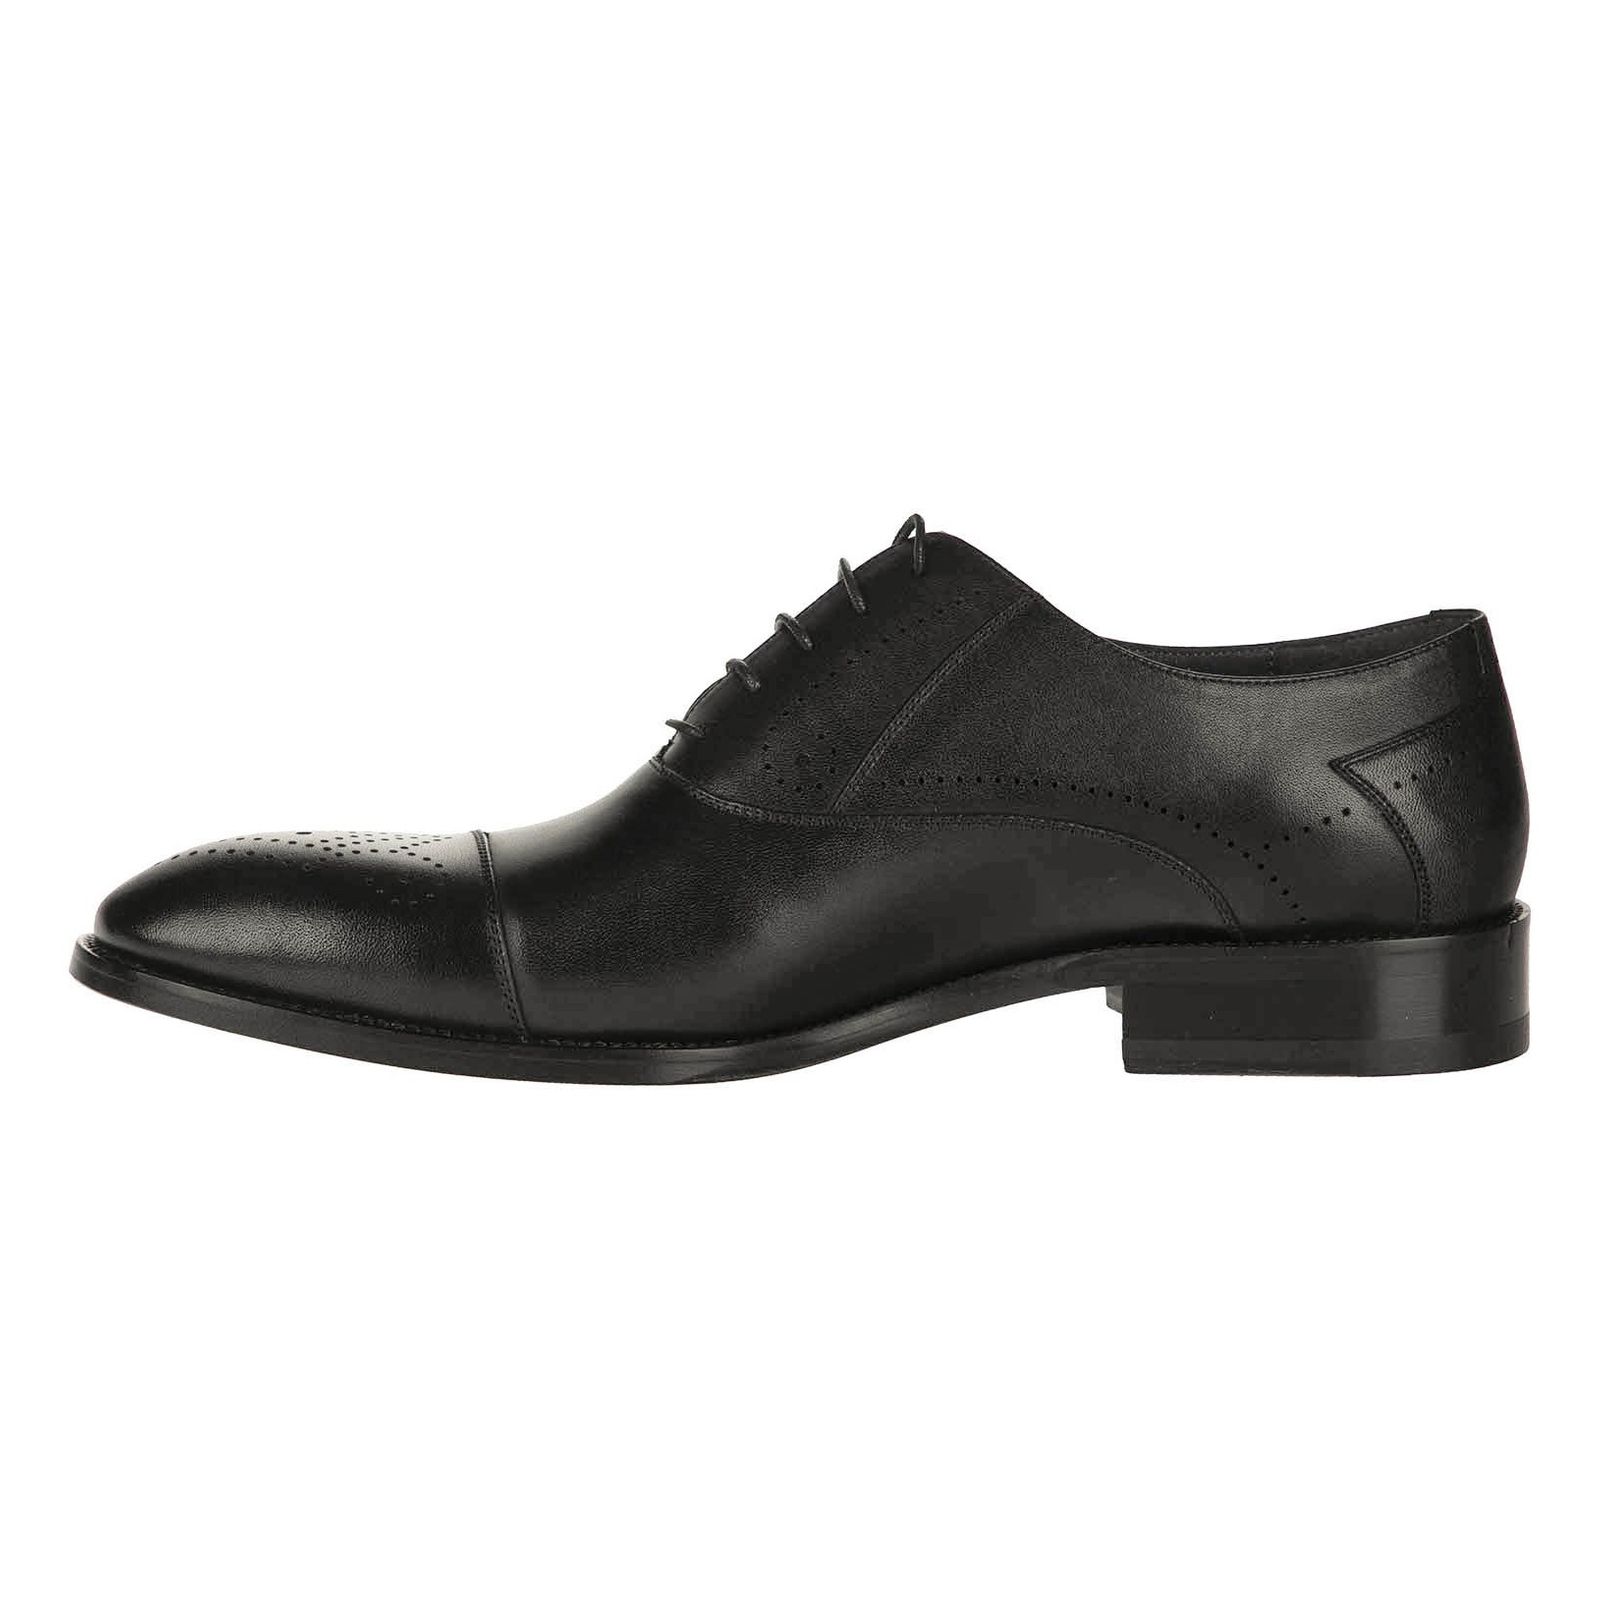 کفش رسمی چرم مردانه - گاندو - مشکی - 6